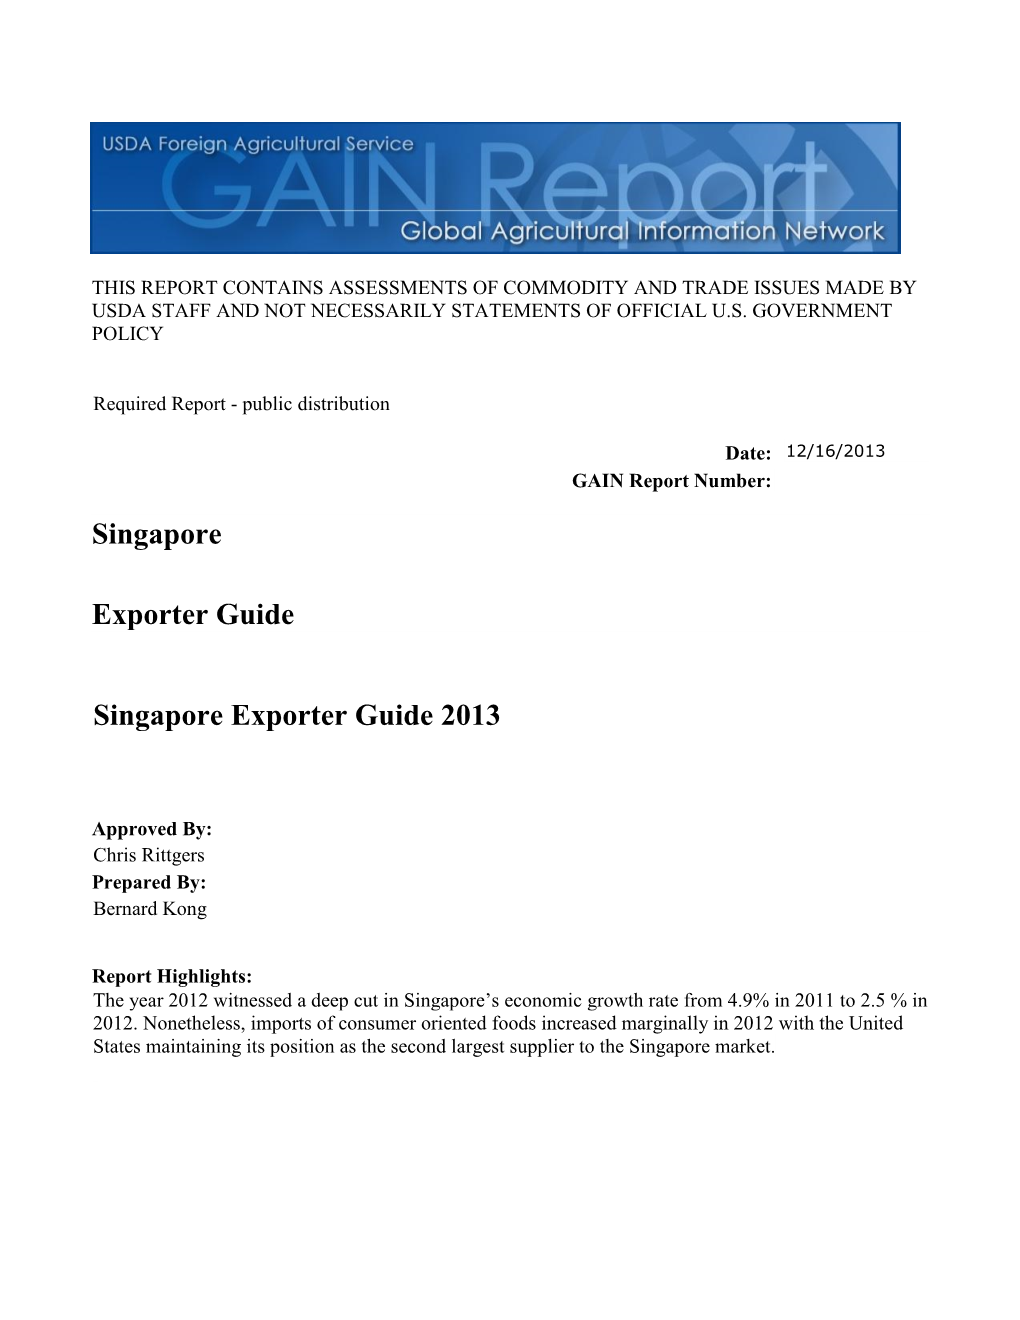 Singapore Exporter Guide 2013 Exporter